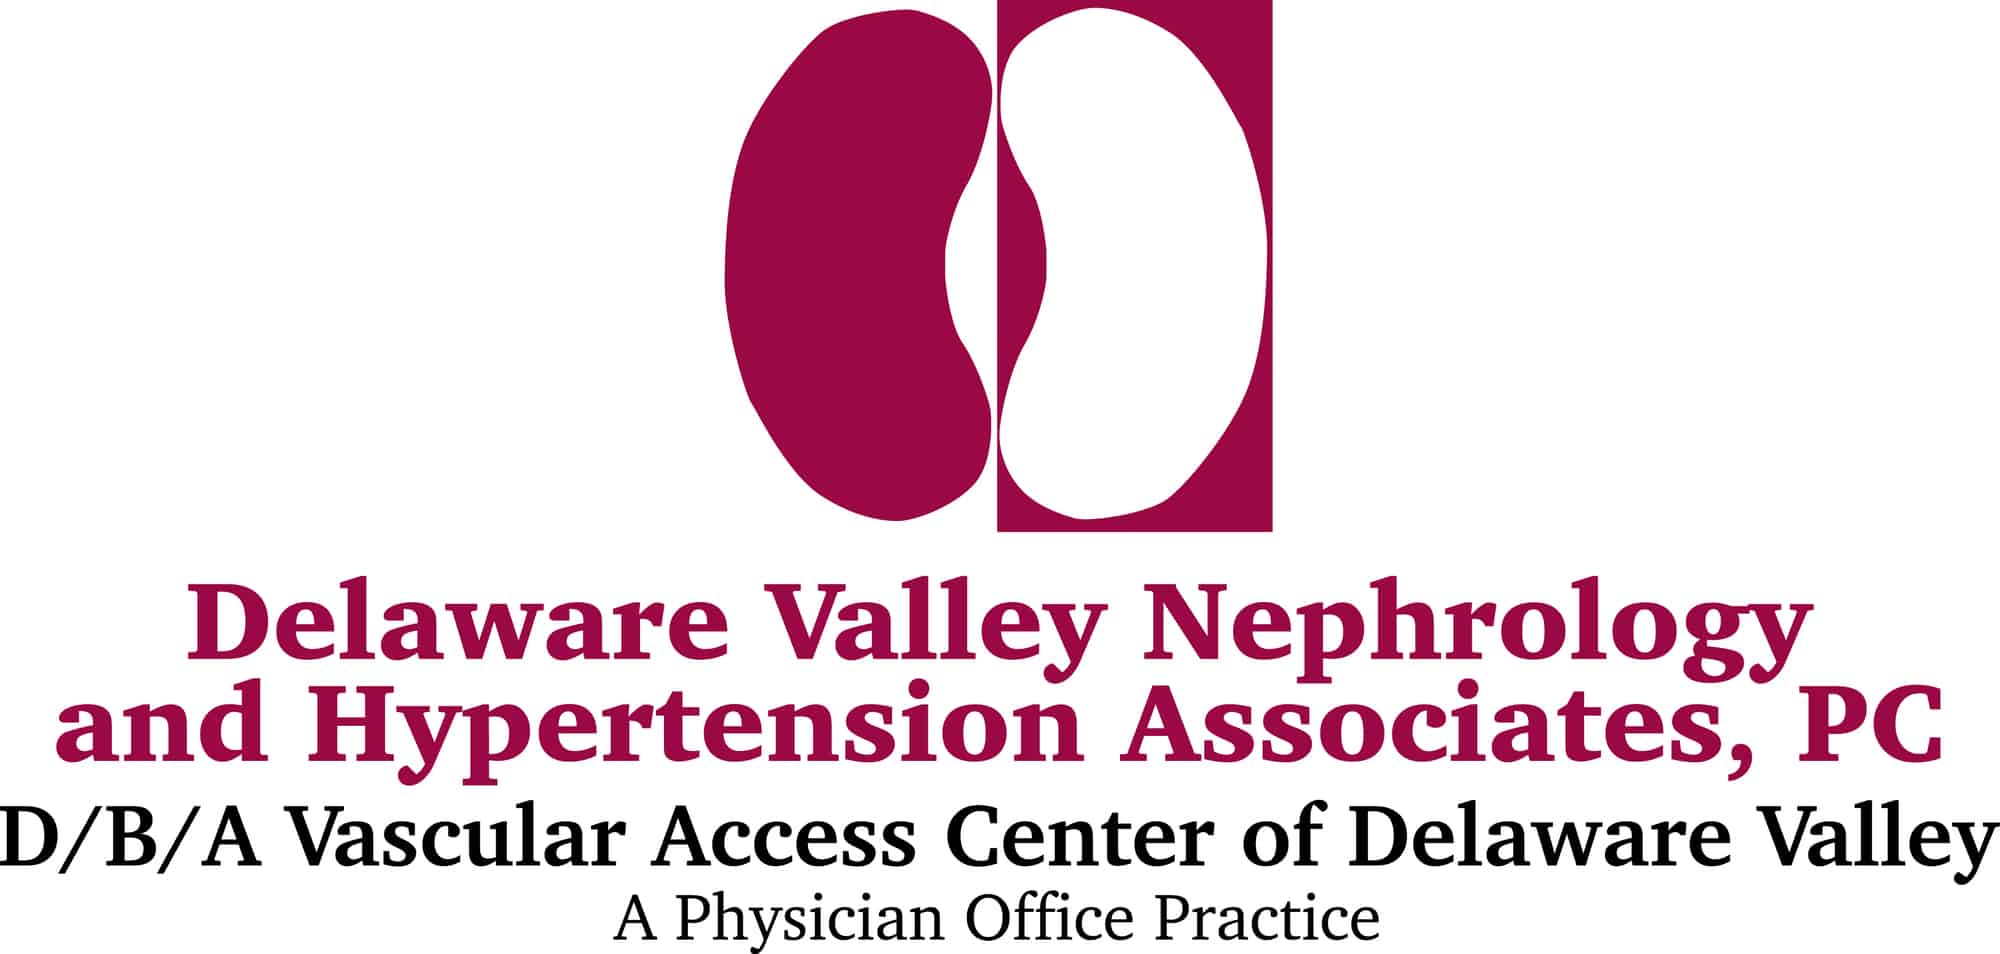 Vascular Access Center of Delaware Valley